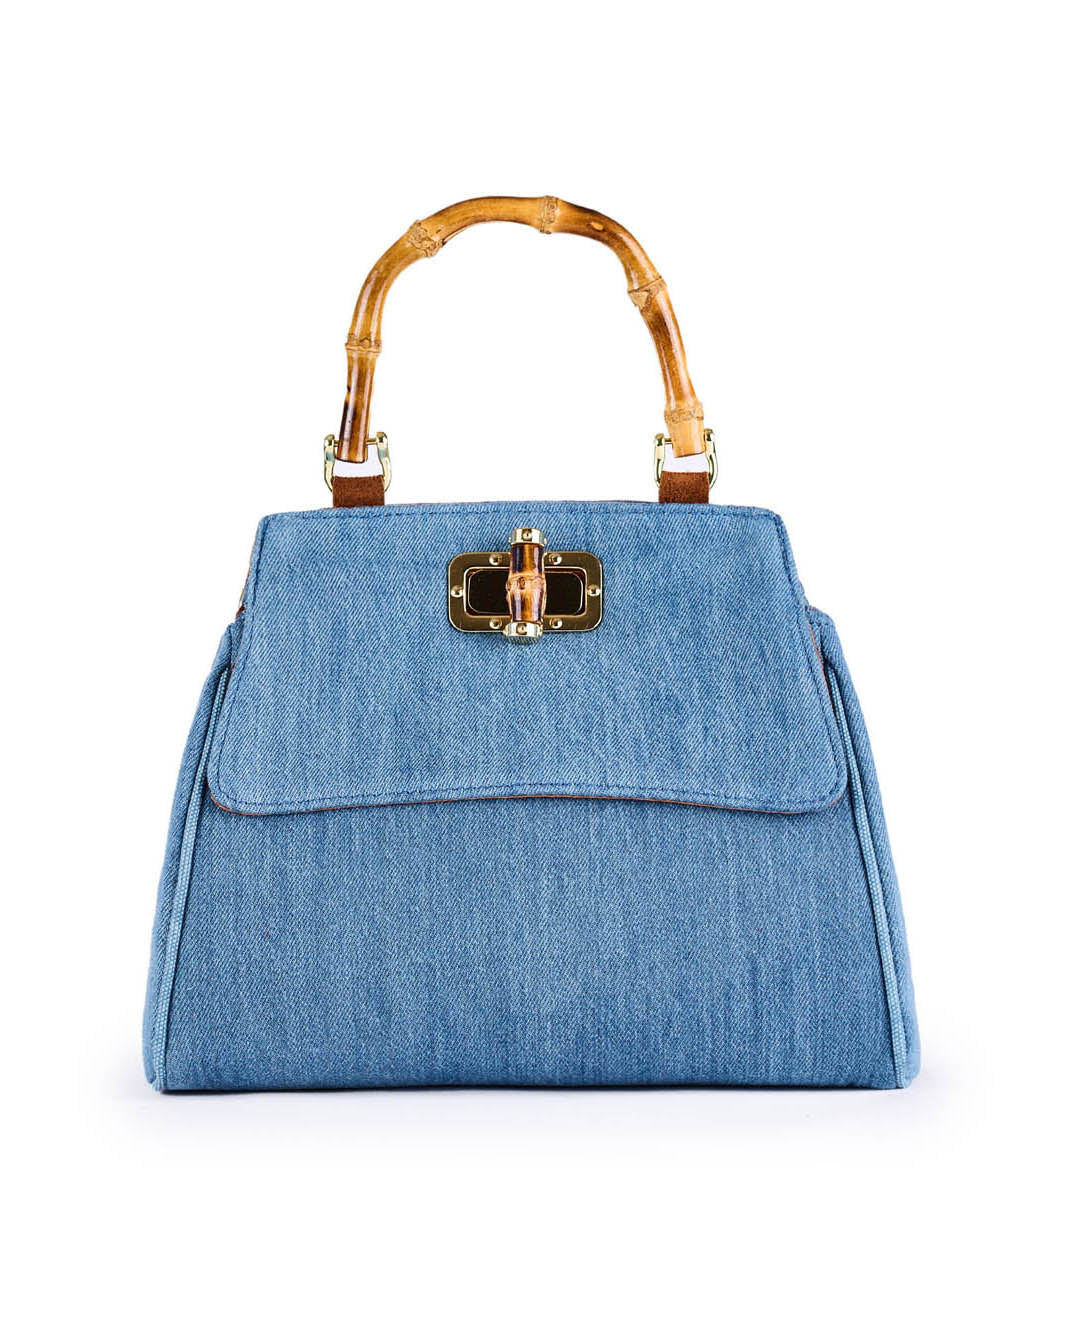 Light blue denim handbag with bamboo handle and gold clasp